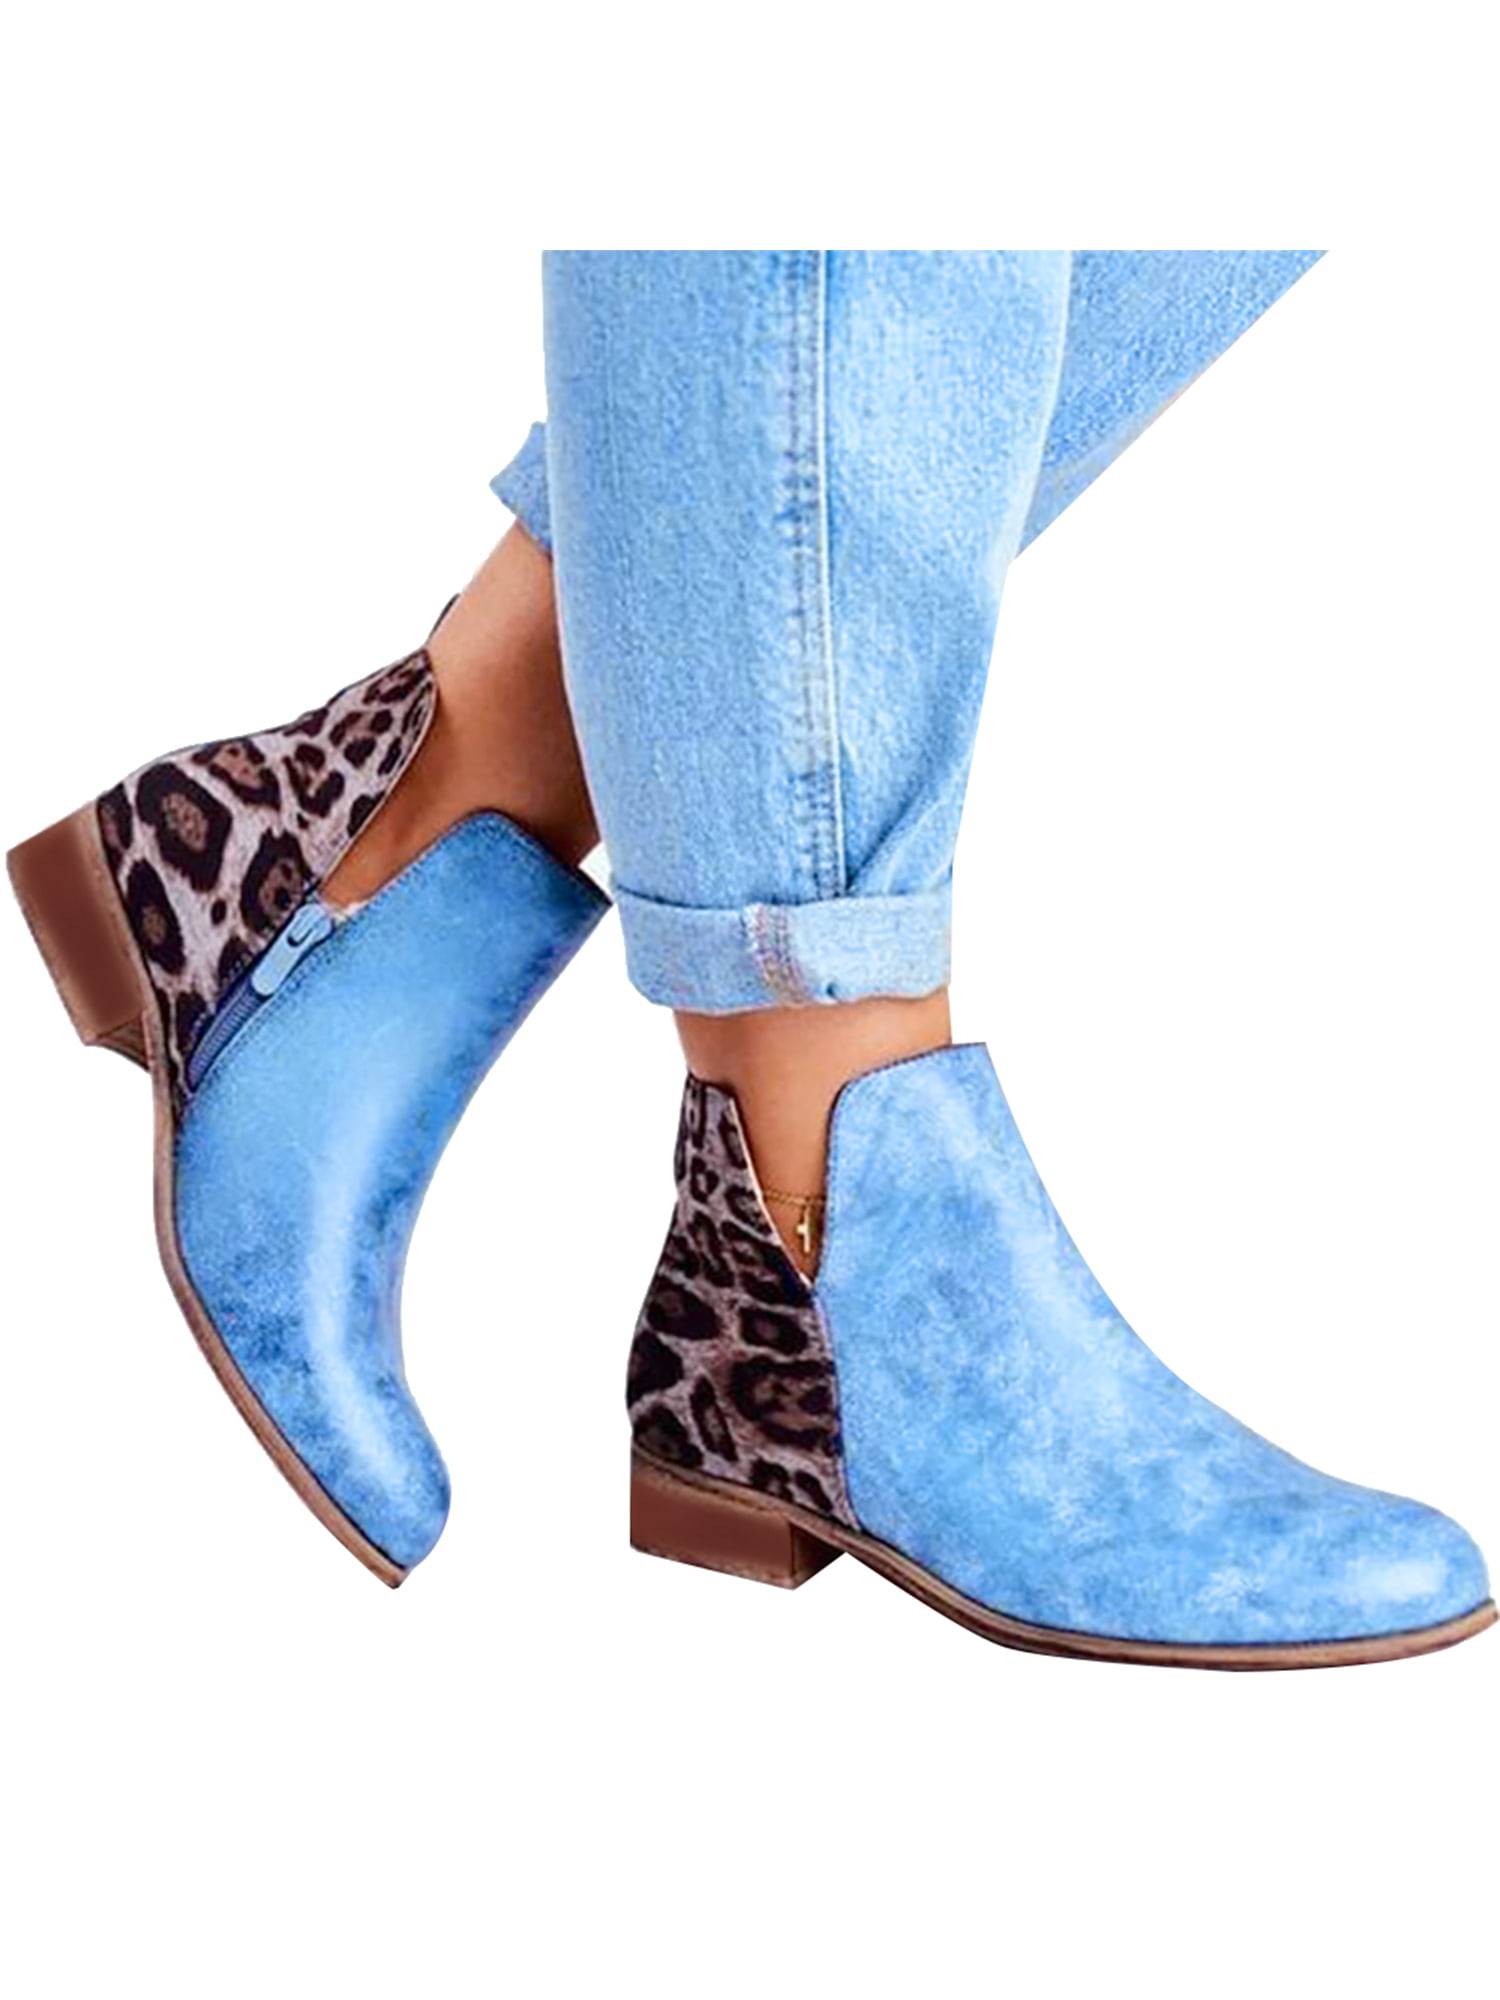 Winter Ankle boots for women Leopard Faux Suede Zip Kitten Heels Casual Booties 